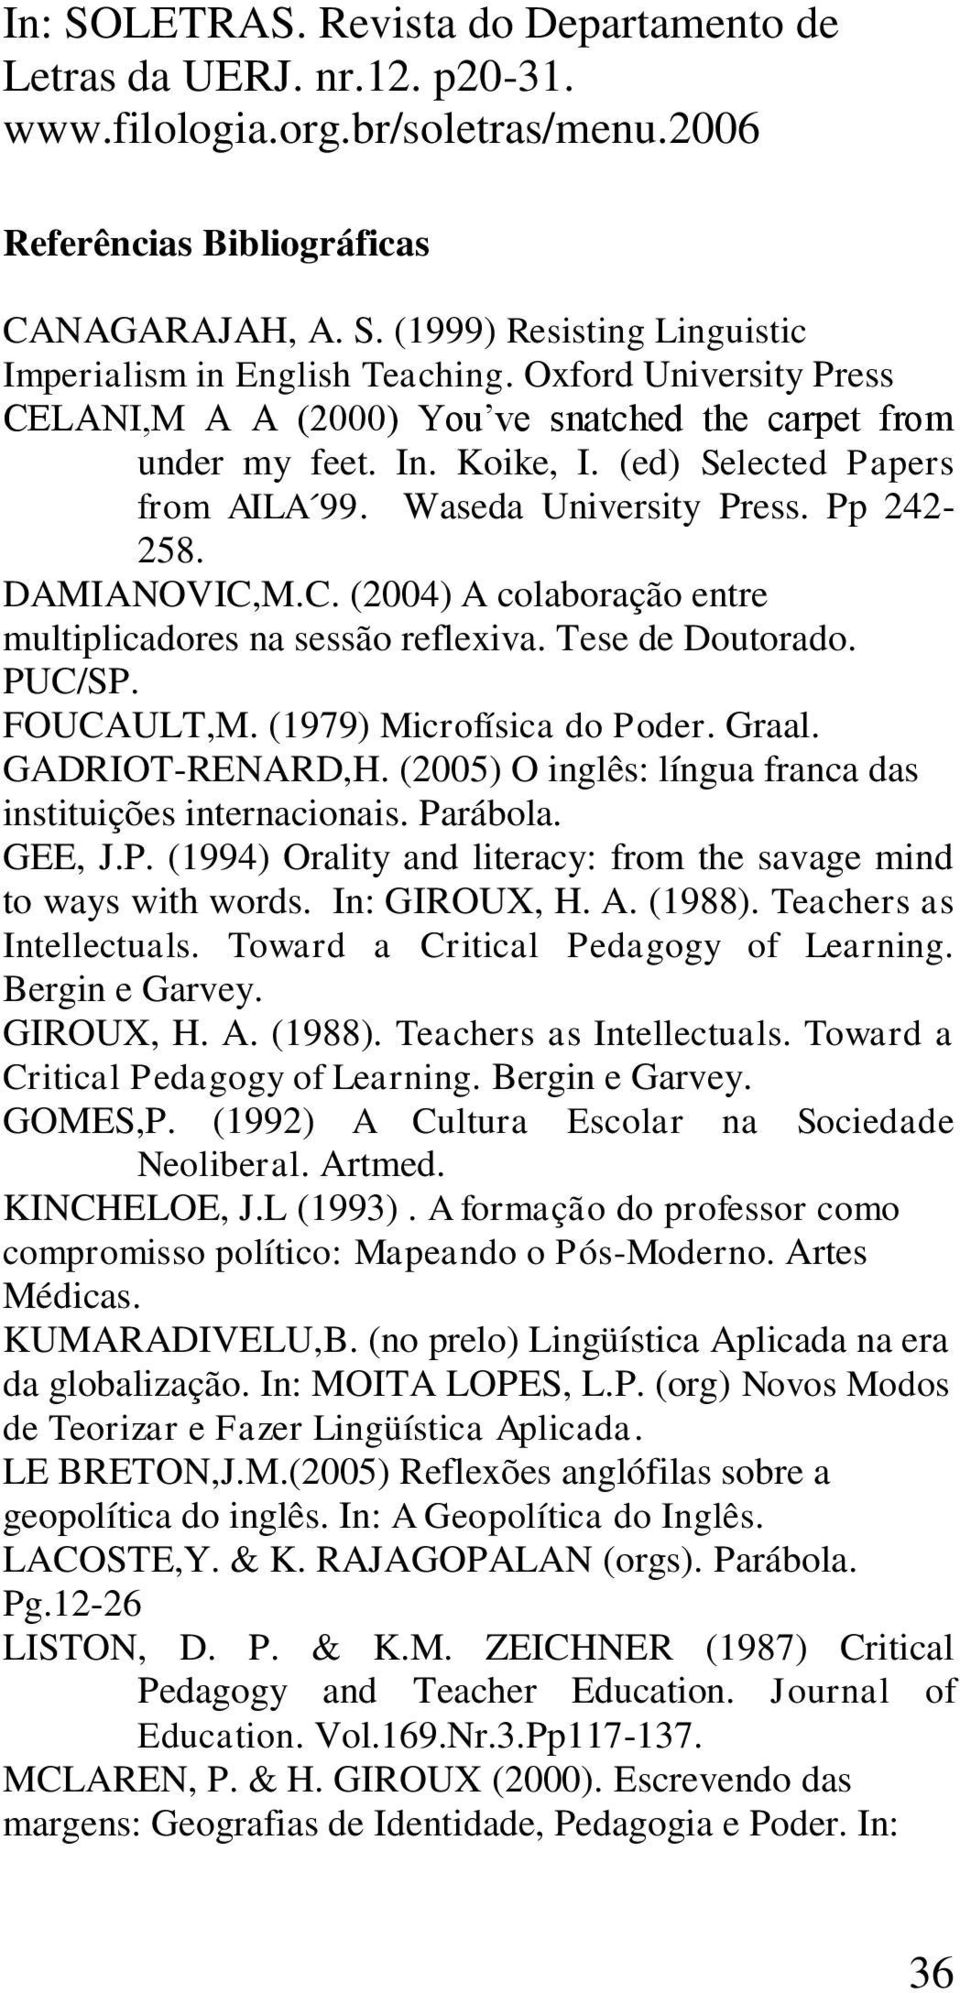 FOUCAULT,M. (1979) Microfísica do Poder. Graal. GADRIOT-RENARD,H. (2005) O inglês: língua franca das instituições internacionais. Parábola. GEE, J.P. (1994) Orality and literacy: from the savage mind to ways with words.